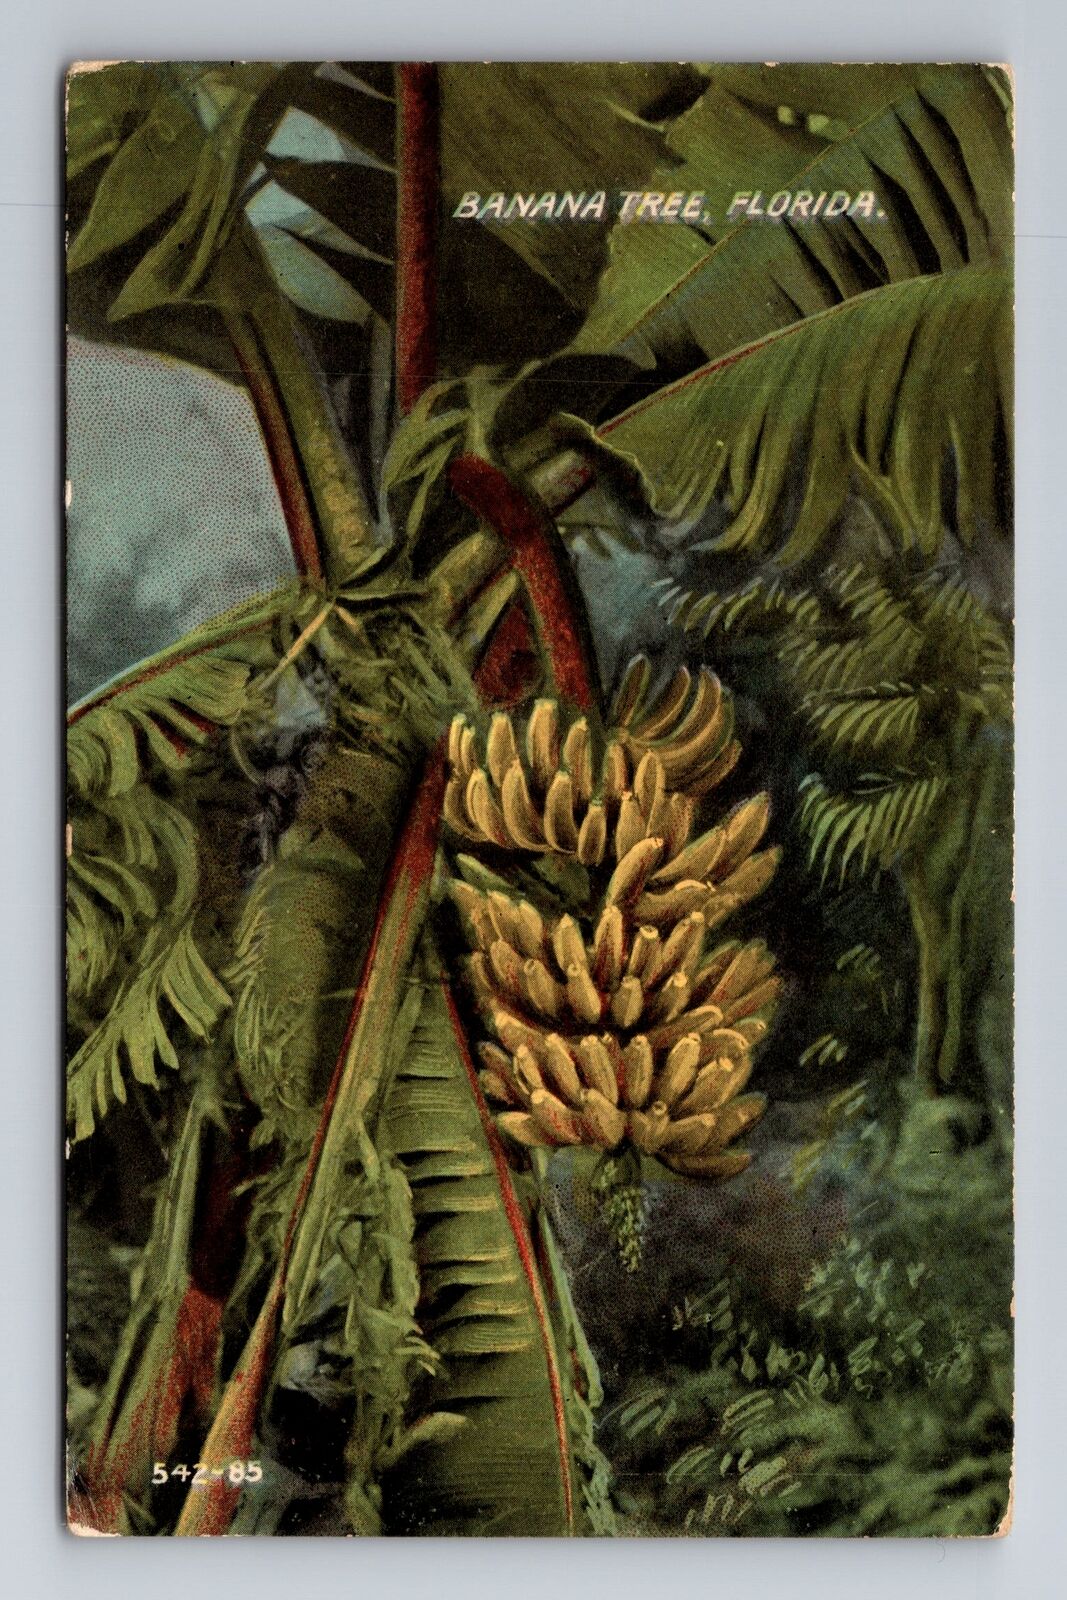 FL-Florida, Banana Tree, Antique, Vintage Souvenir Postcard